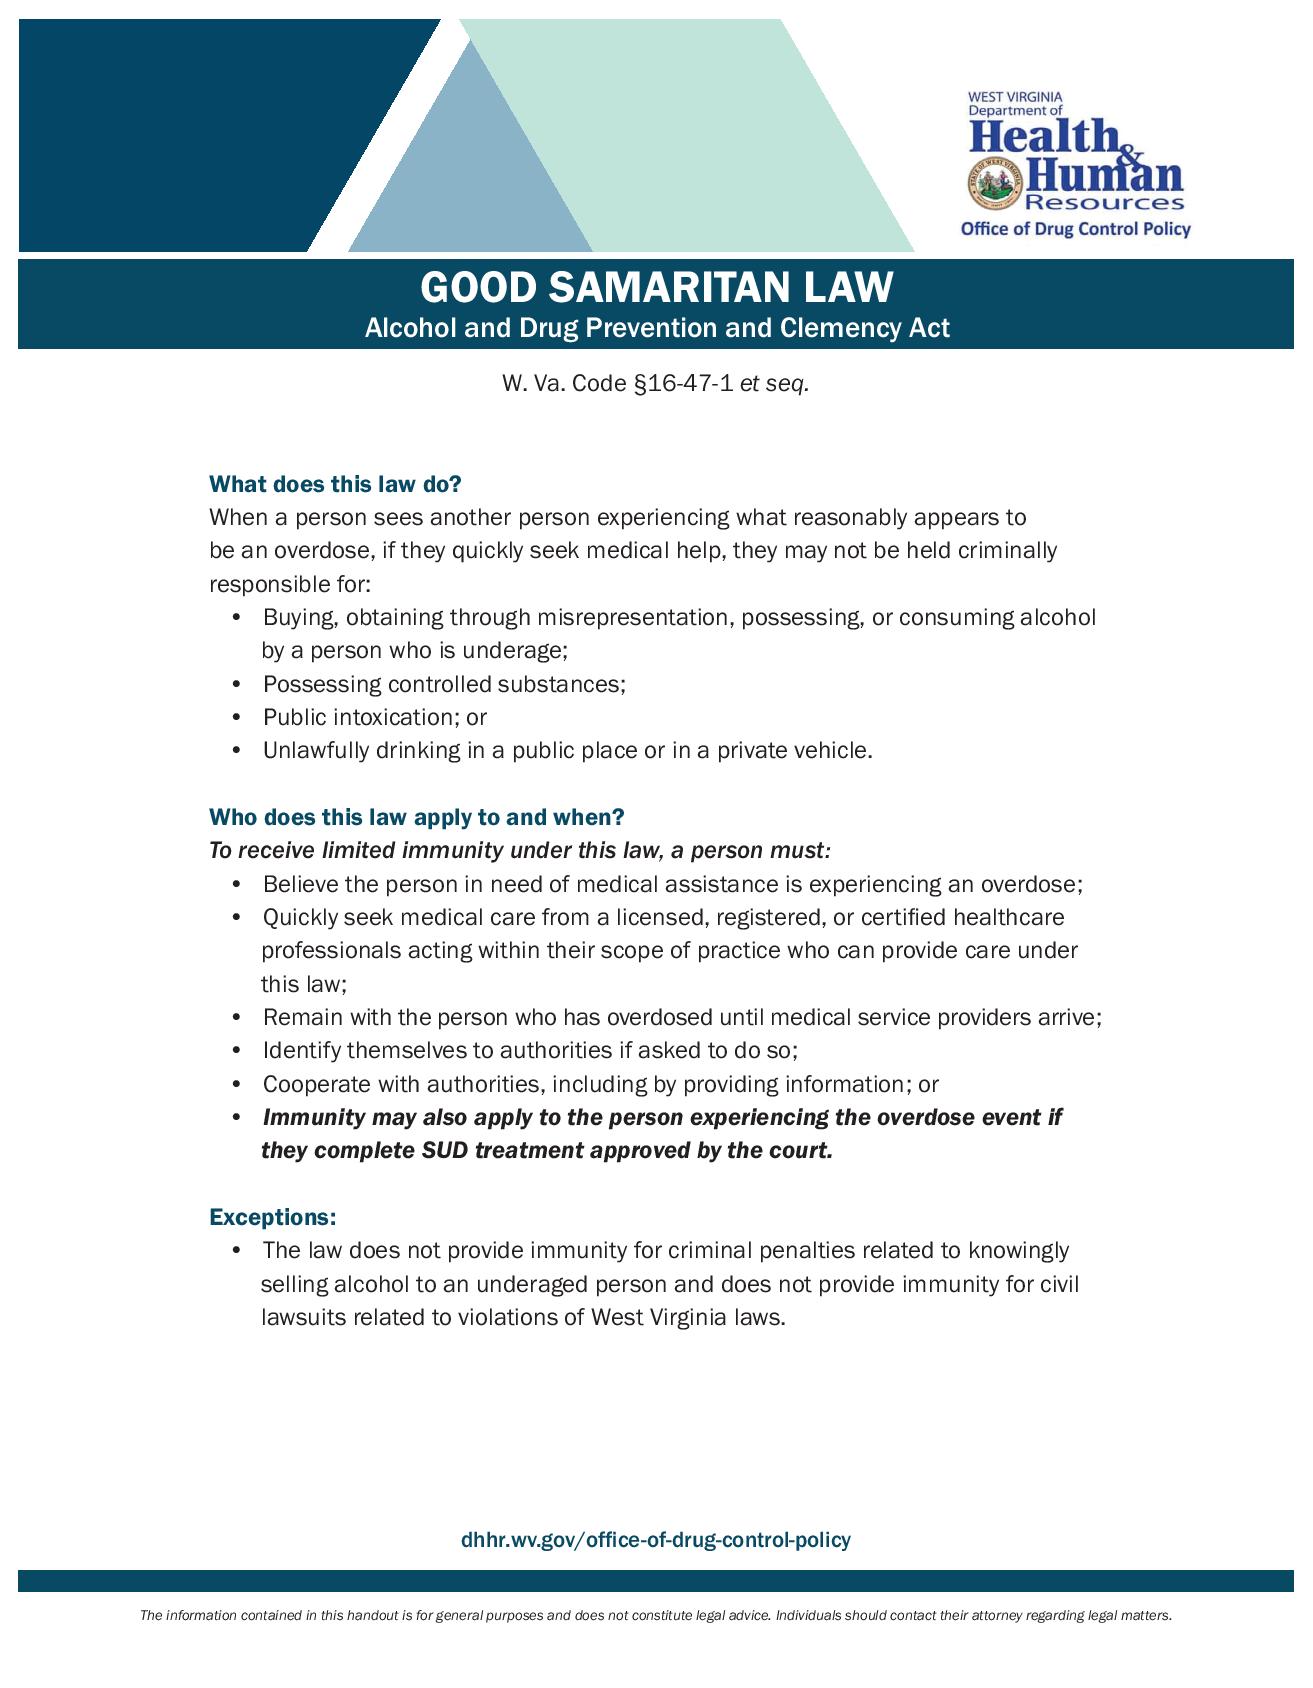 Good Samaritan Law Handout Final-page-001.jpg